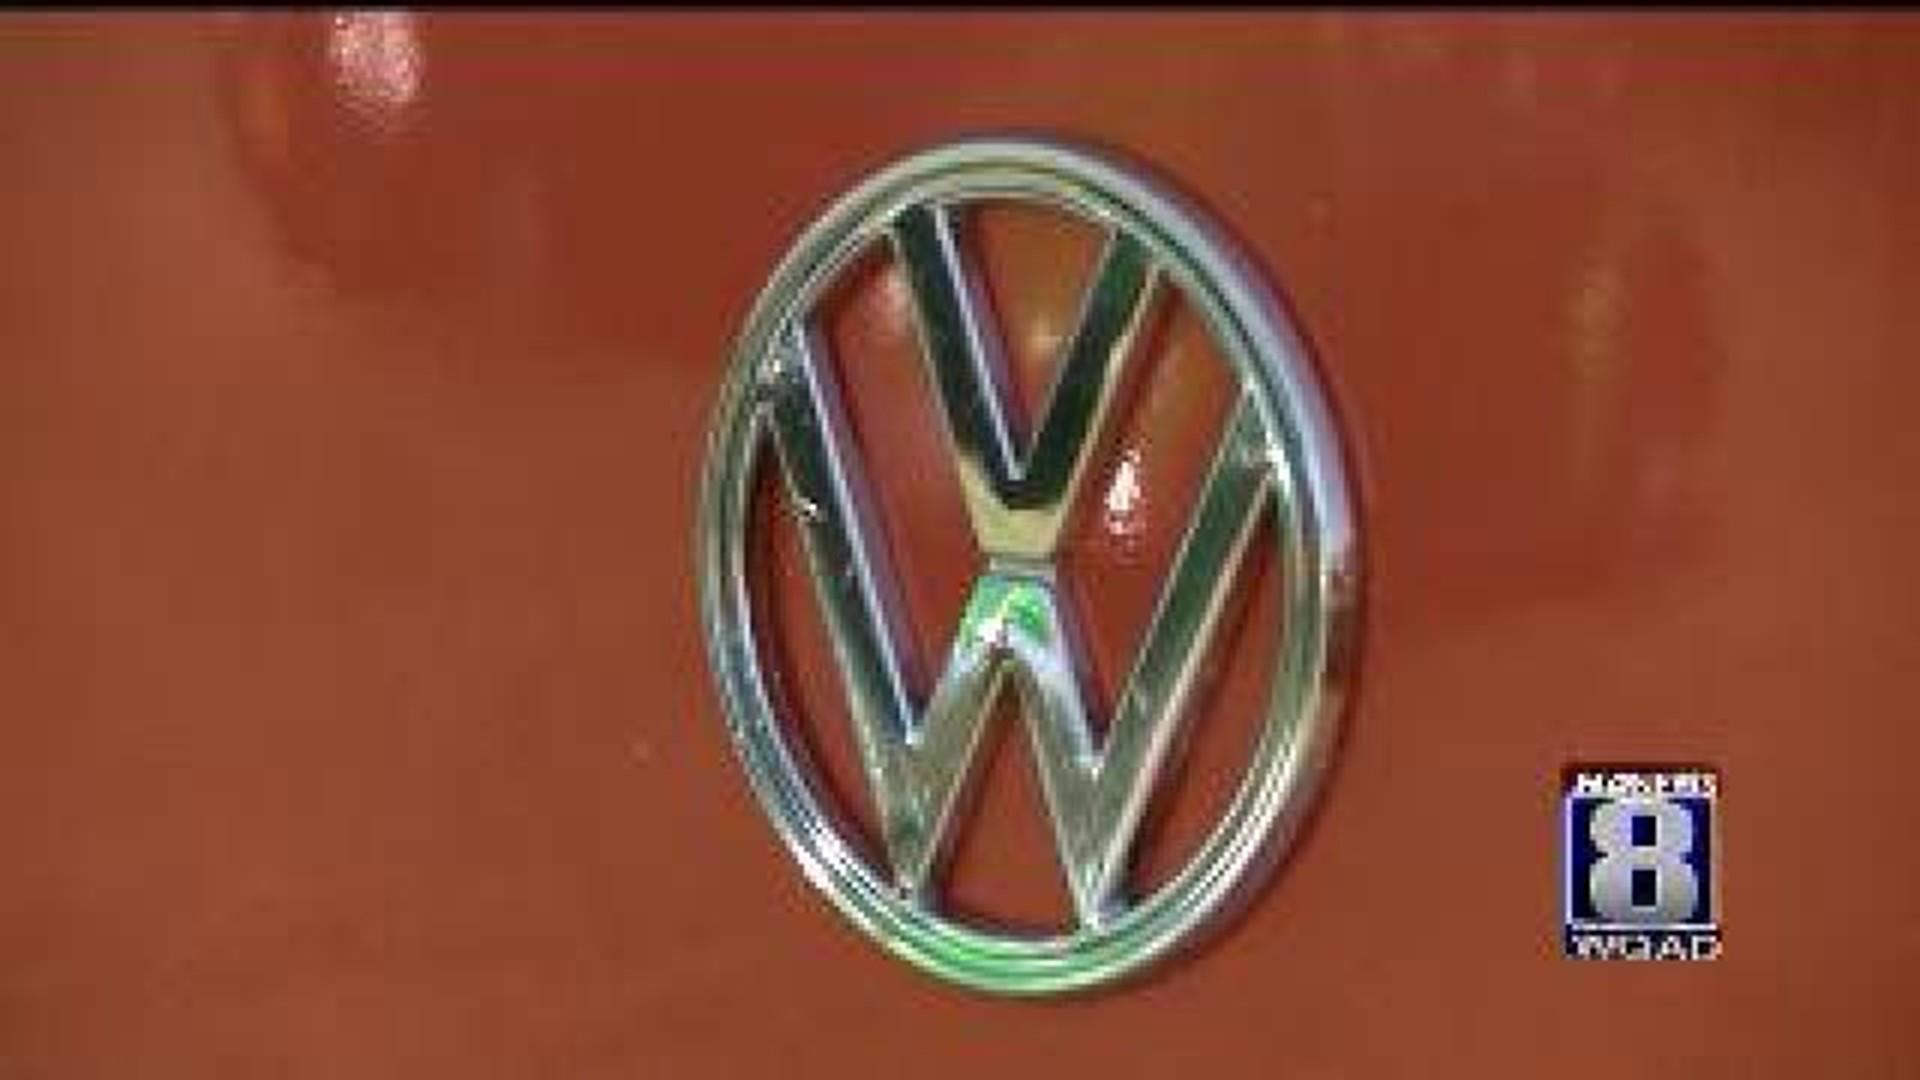 VW Car show